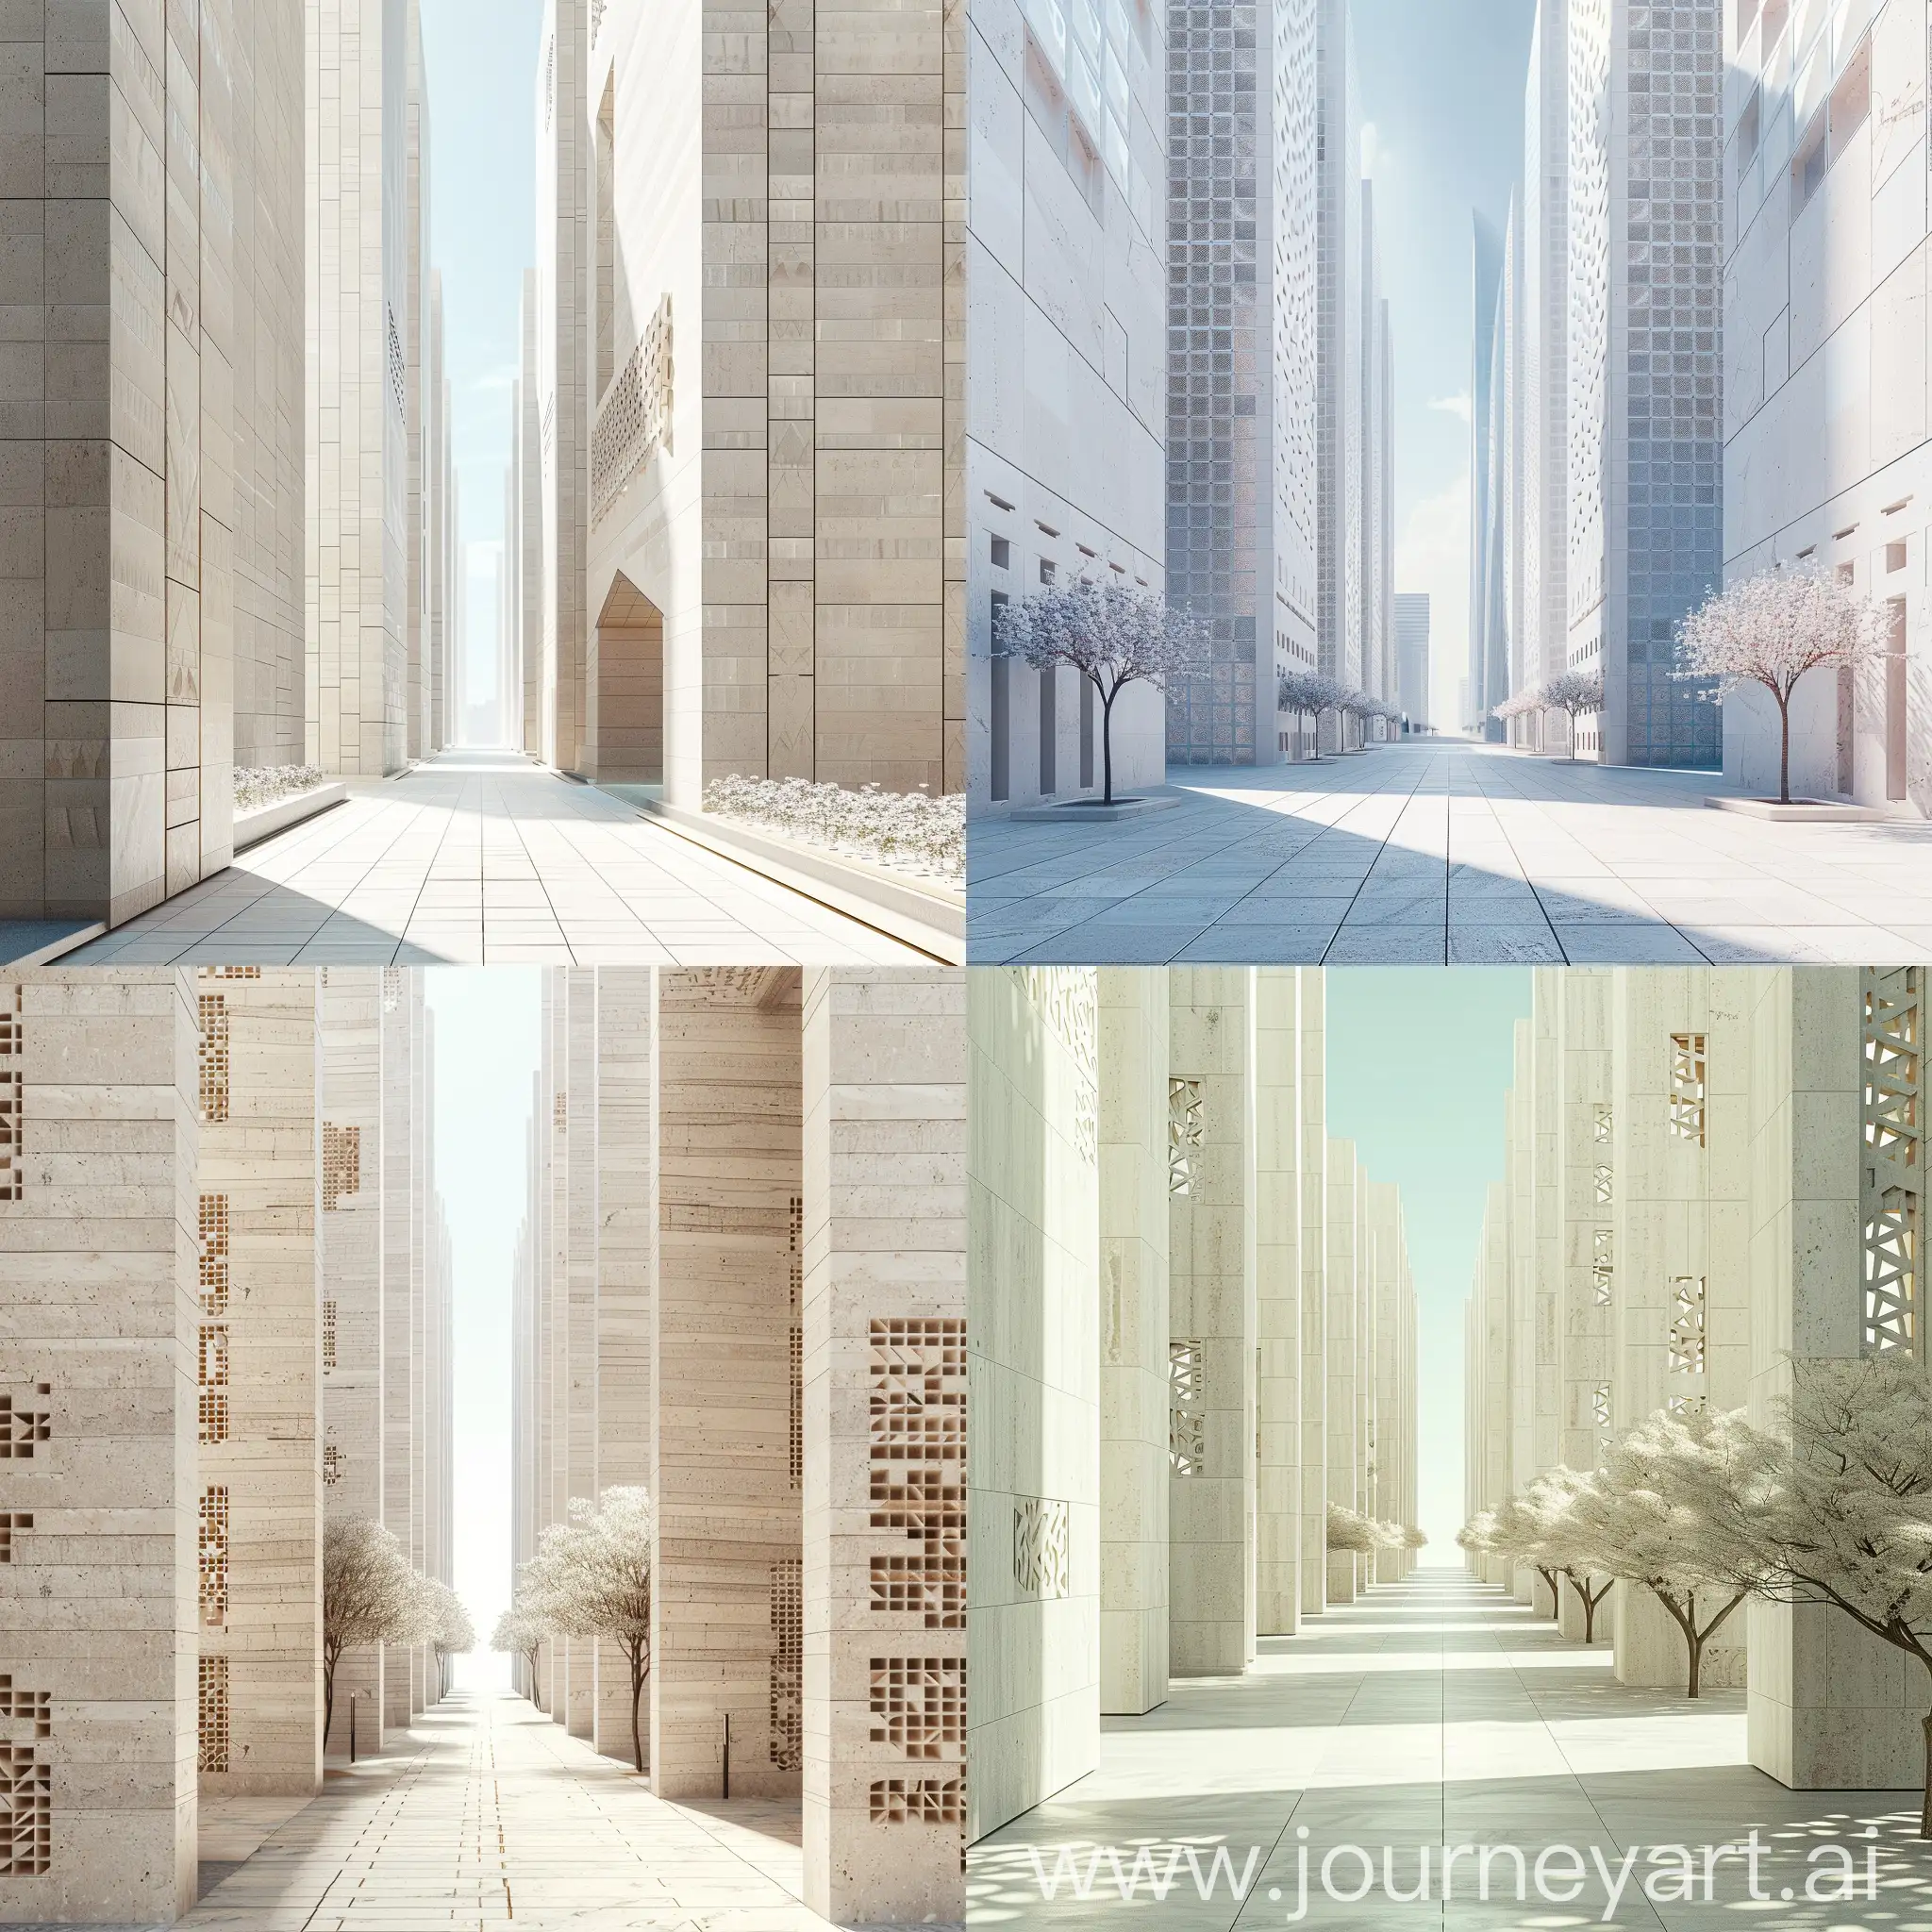 Surreal-Utopian-Cityscape-Clean-Minimalist-Skyscrapers-in-Spring